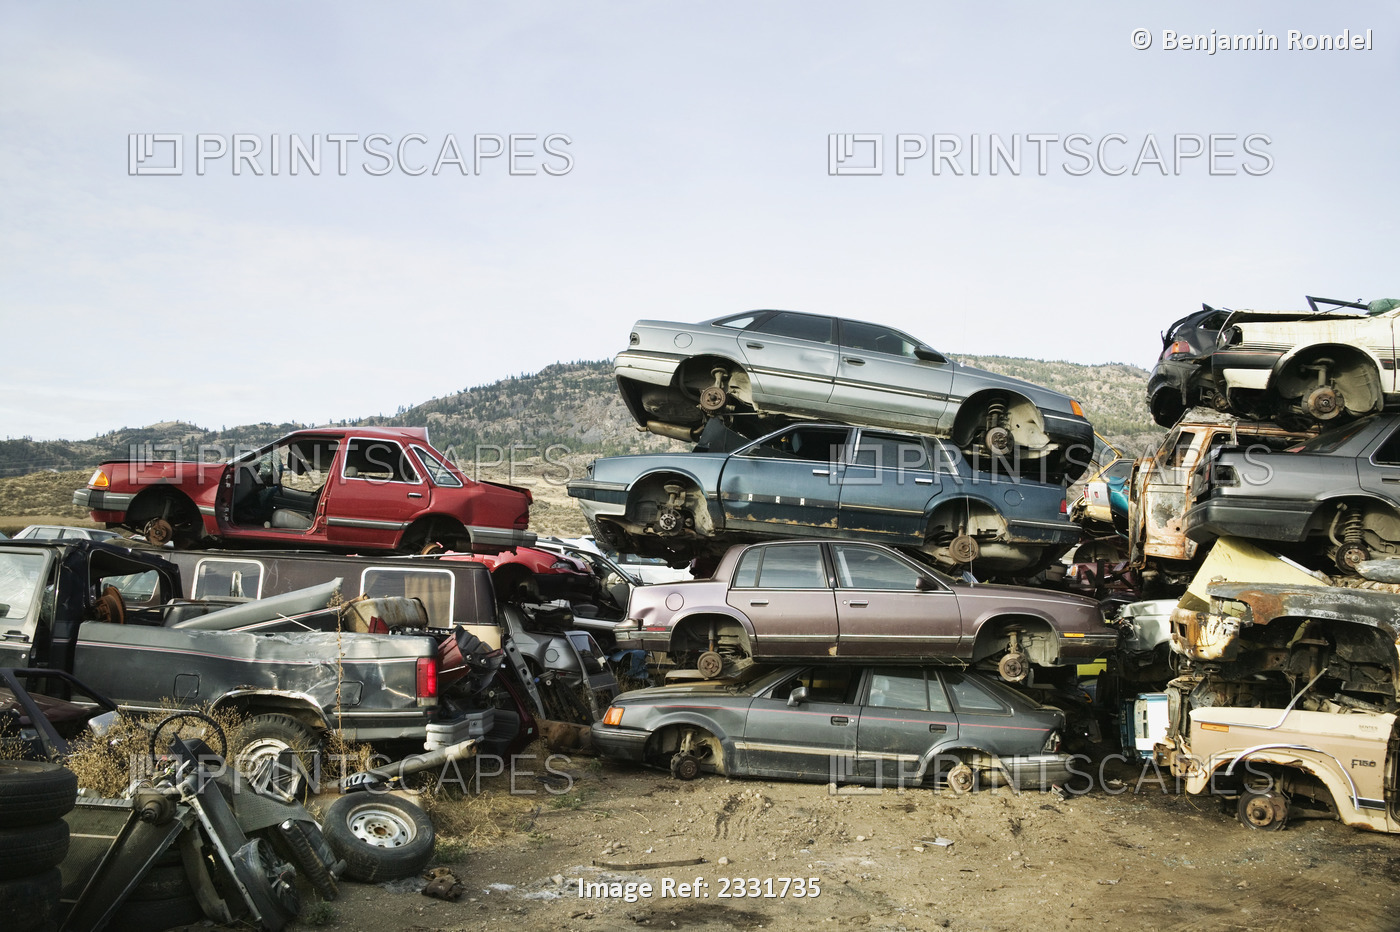 Cars In Junkyard; British Columbia, Canada